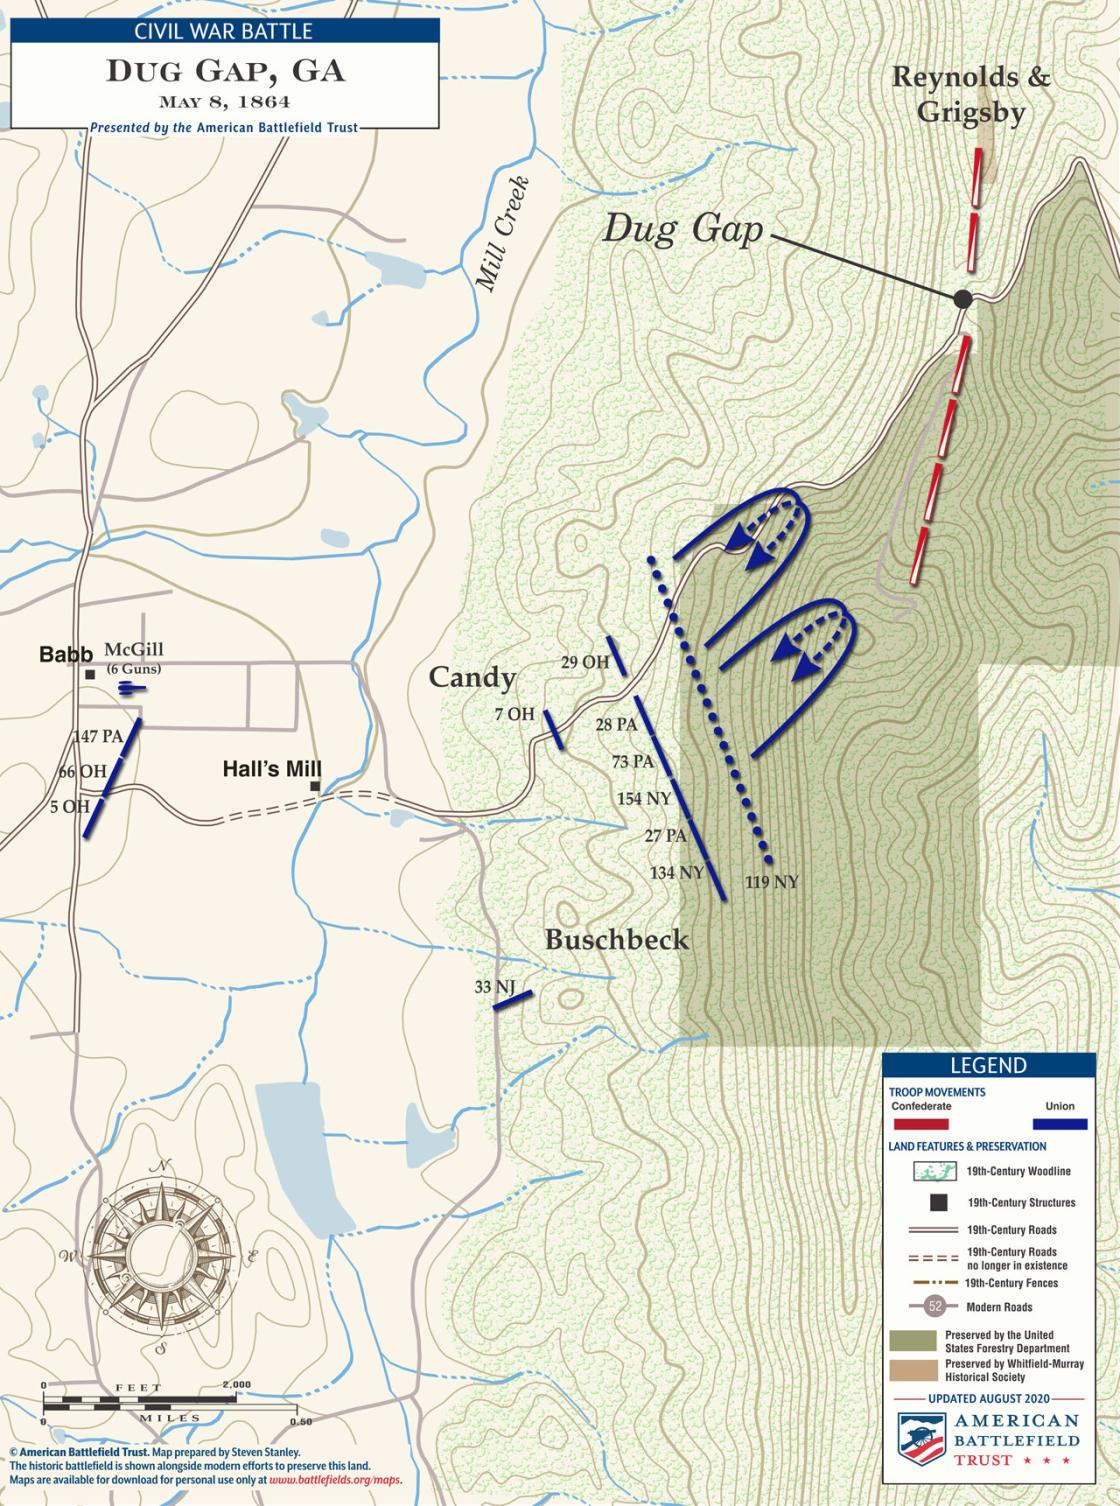 Dug Gap - May 8, 1864 Battle Map